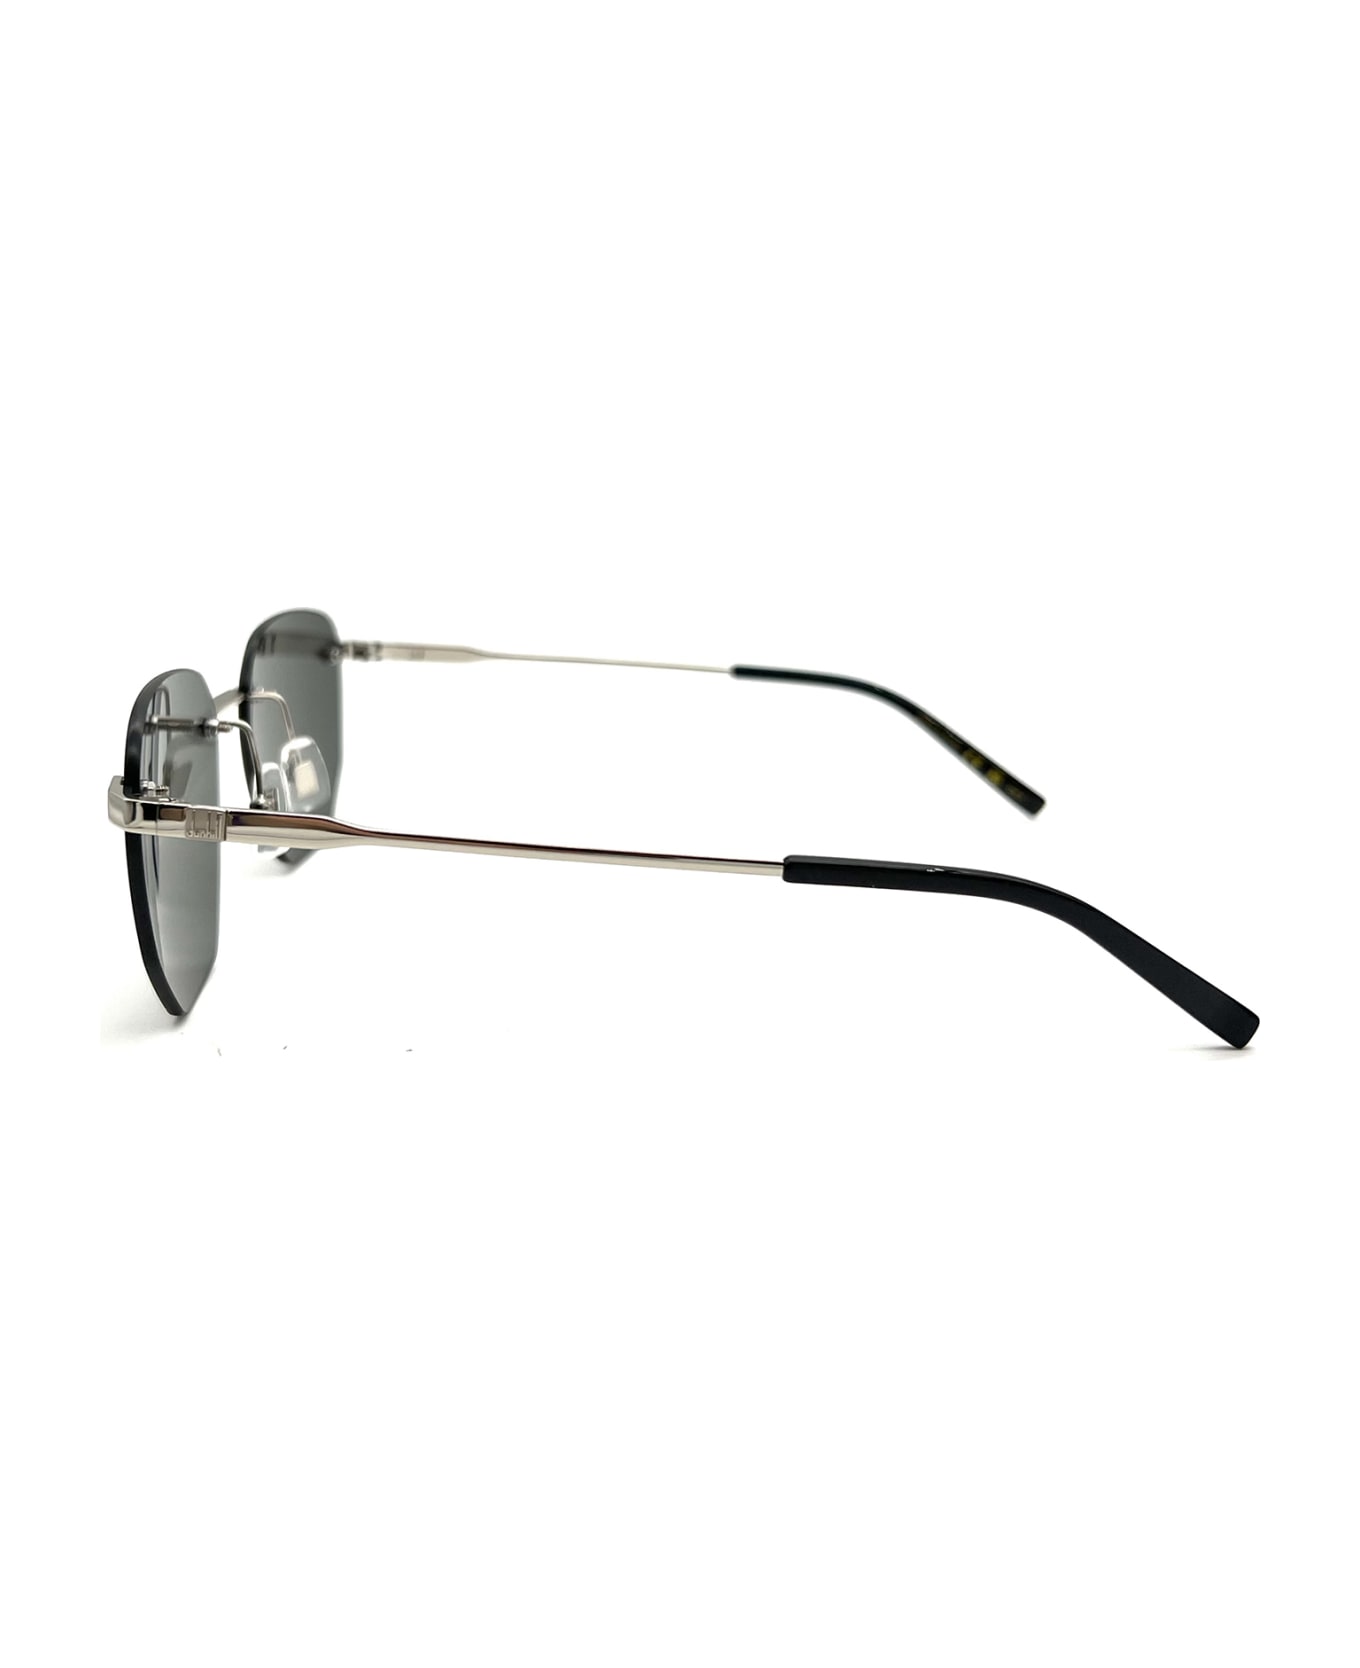 Dunhill DU0066S Sunglasses - Silver Silver Grey